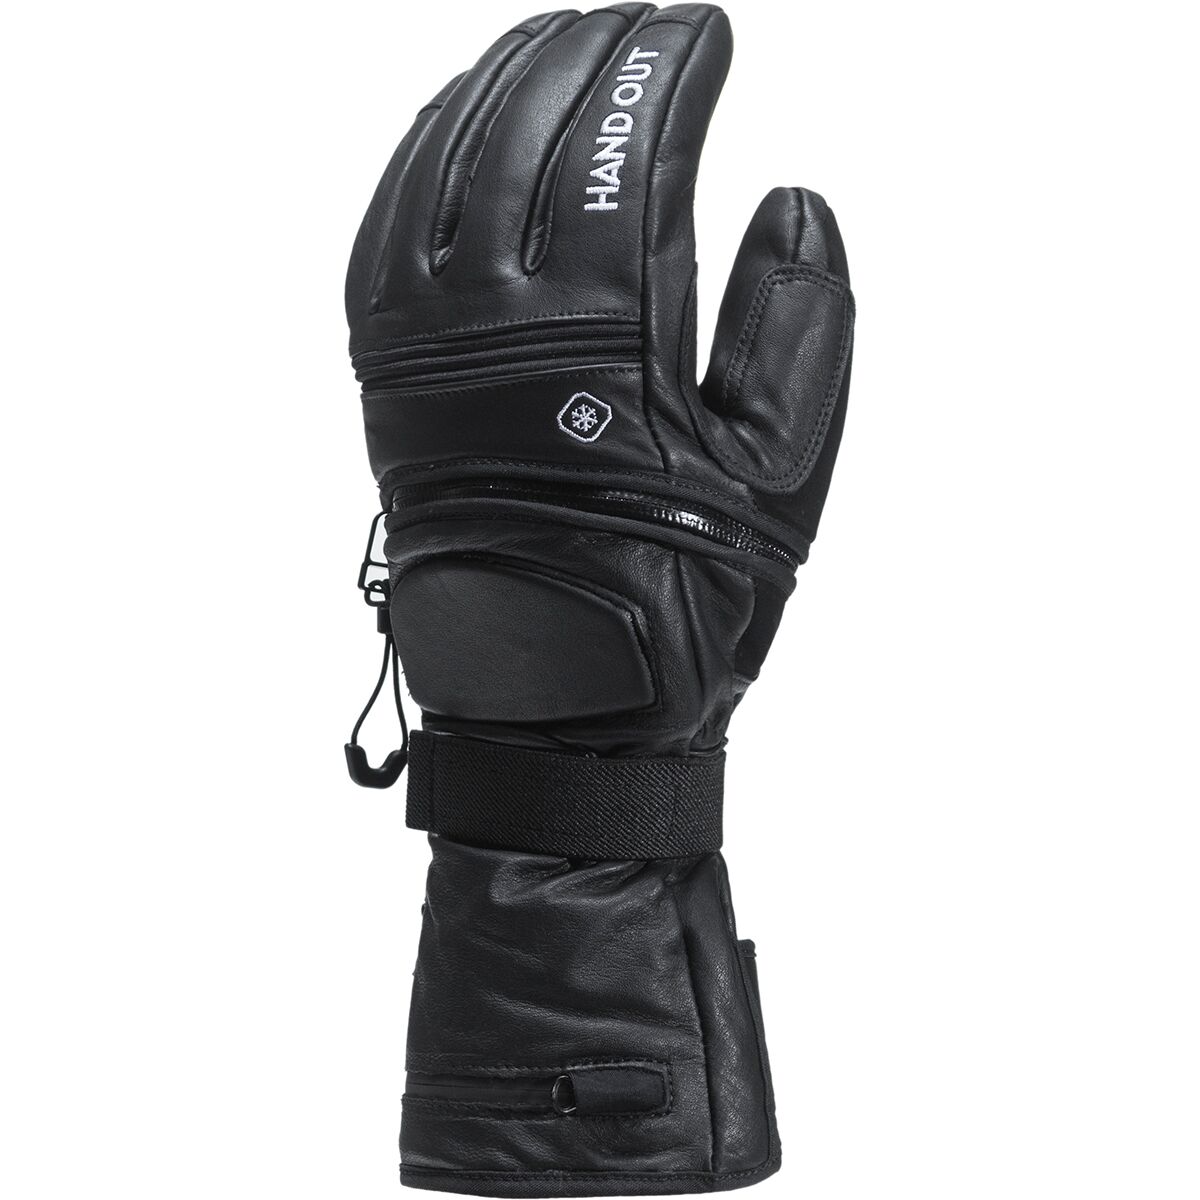 Hand Out Gloves Pro Ski Glove - Men's Black/Grey